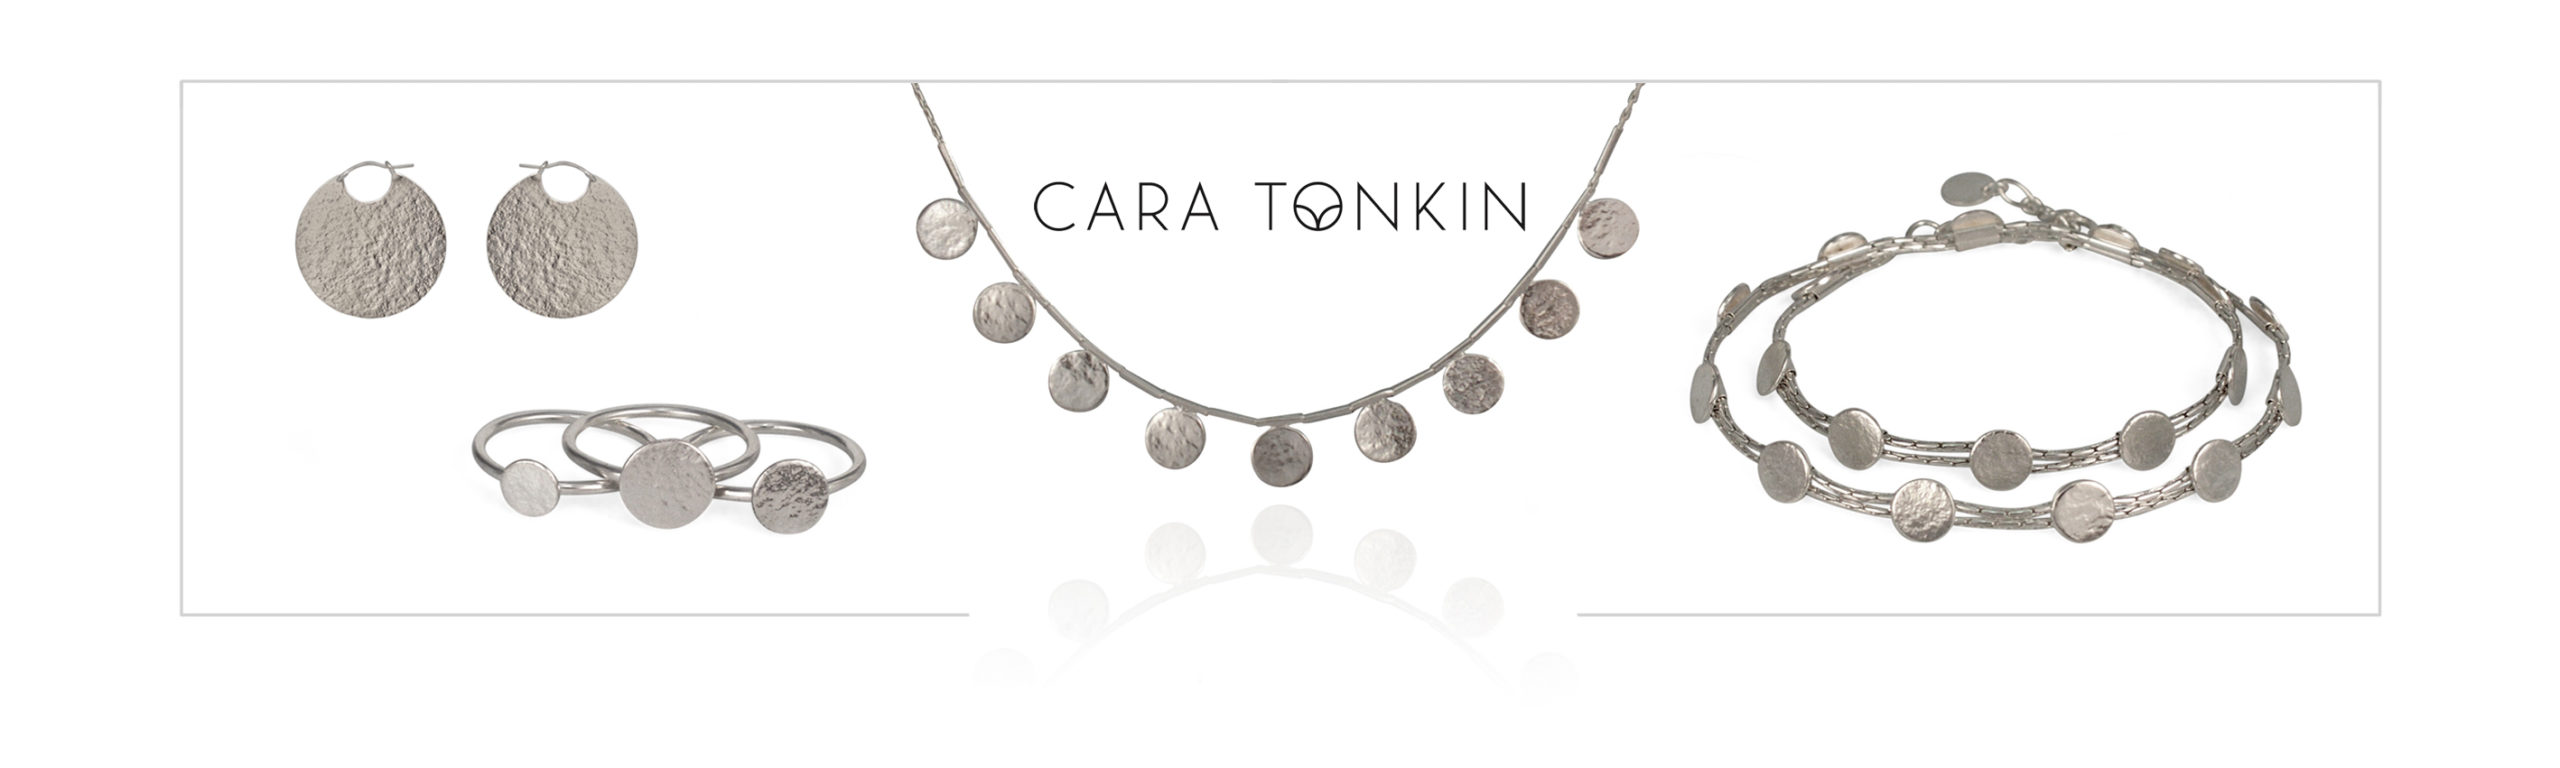 Cara Tonkin Jewellery available at Louise Shafar